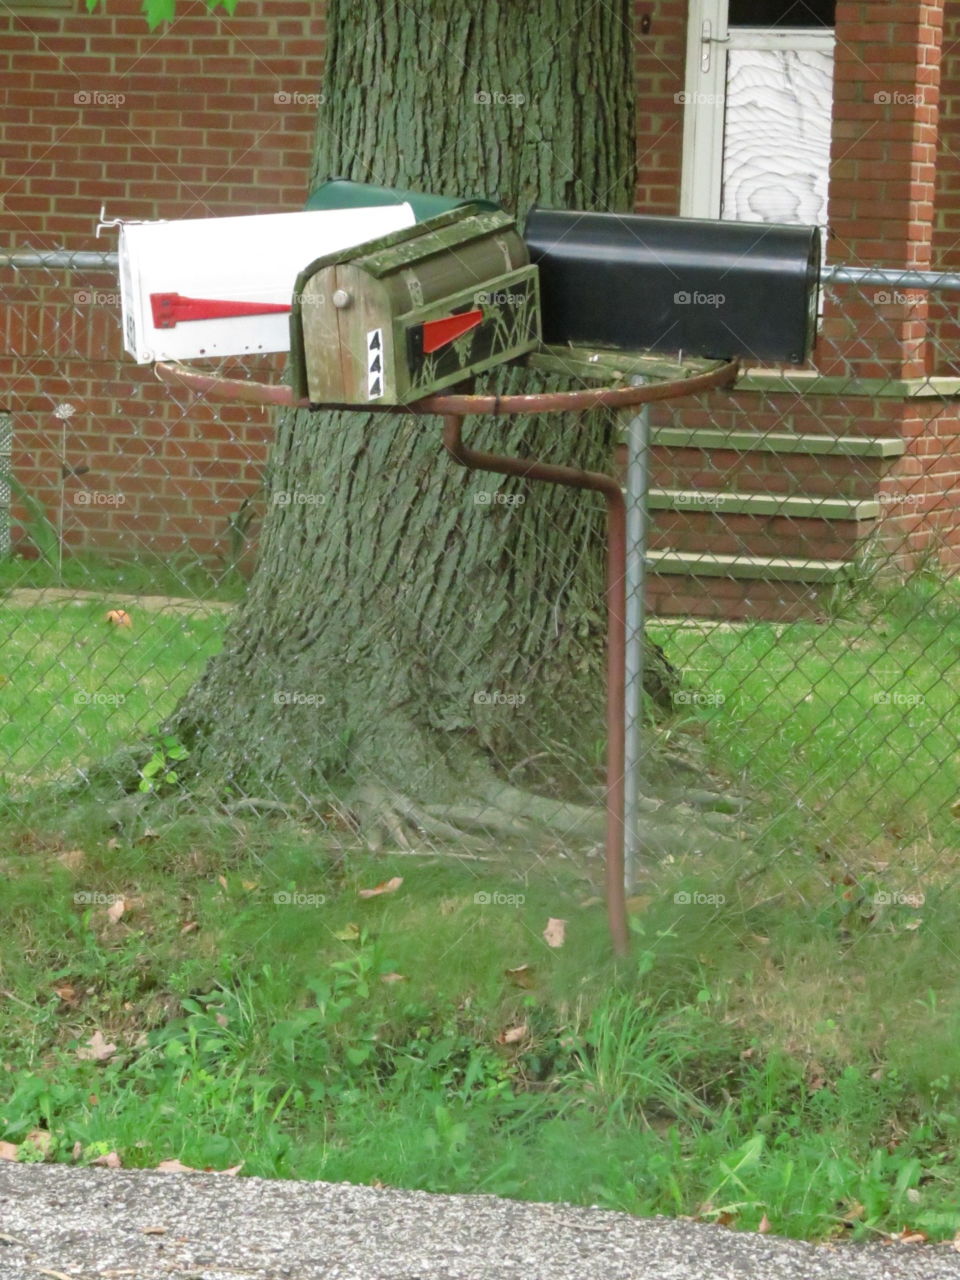 Mailbox turntable